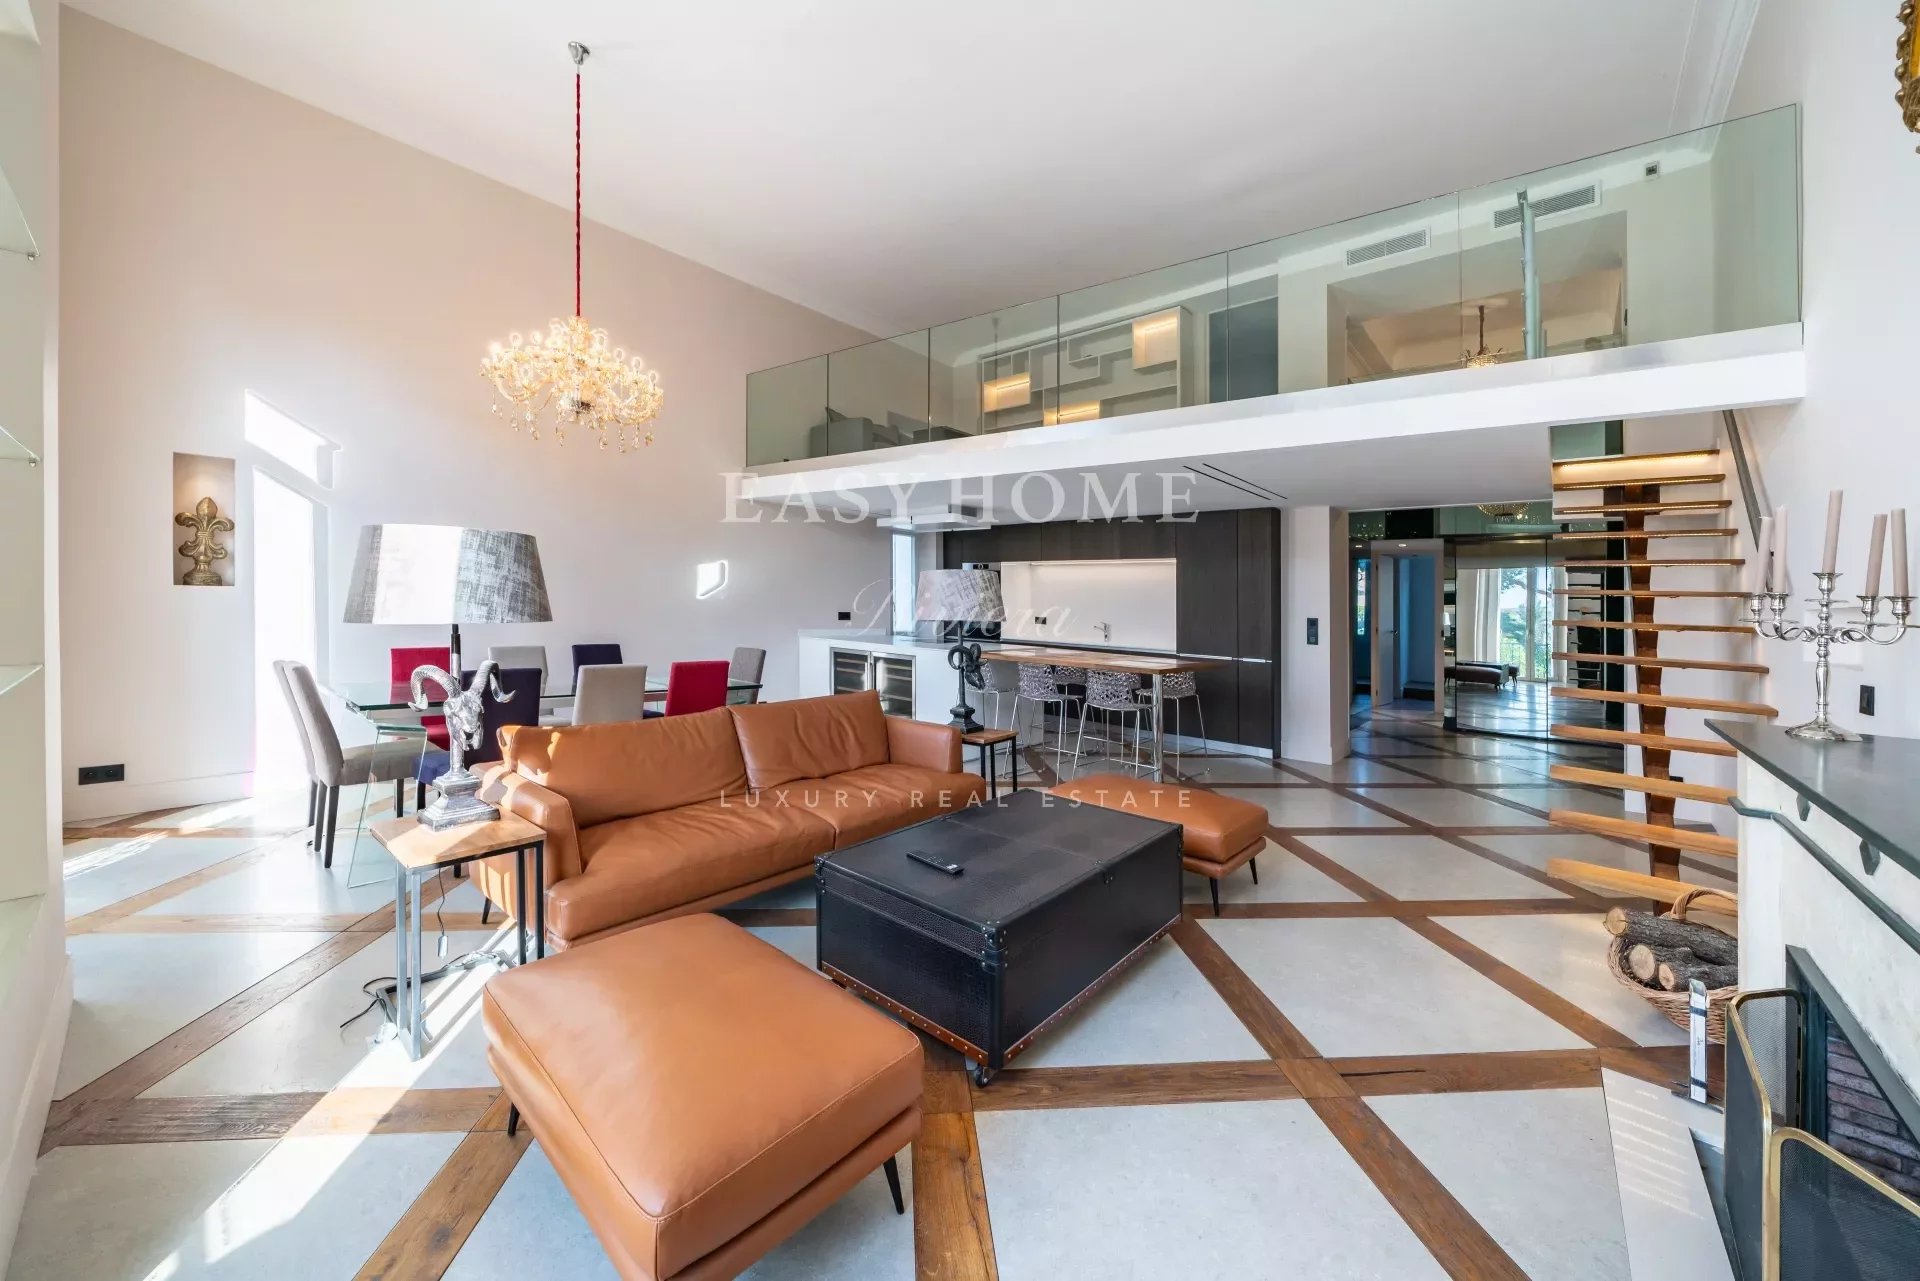 Vente Appartement 150m² à Cannes (06400) - Easy Home Riviera